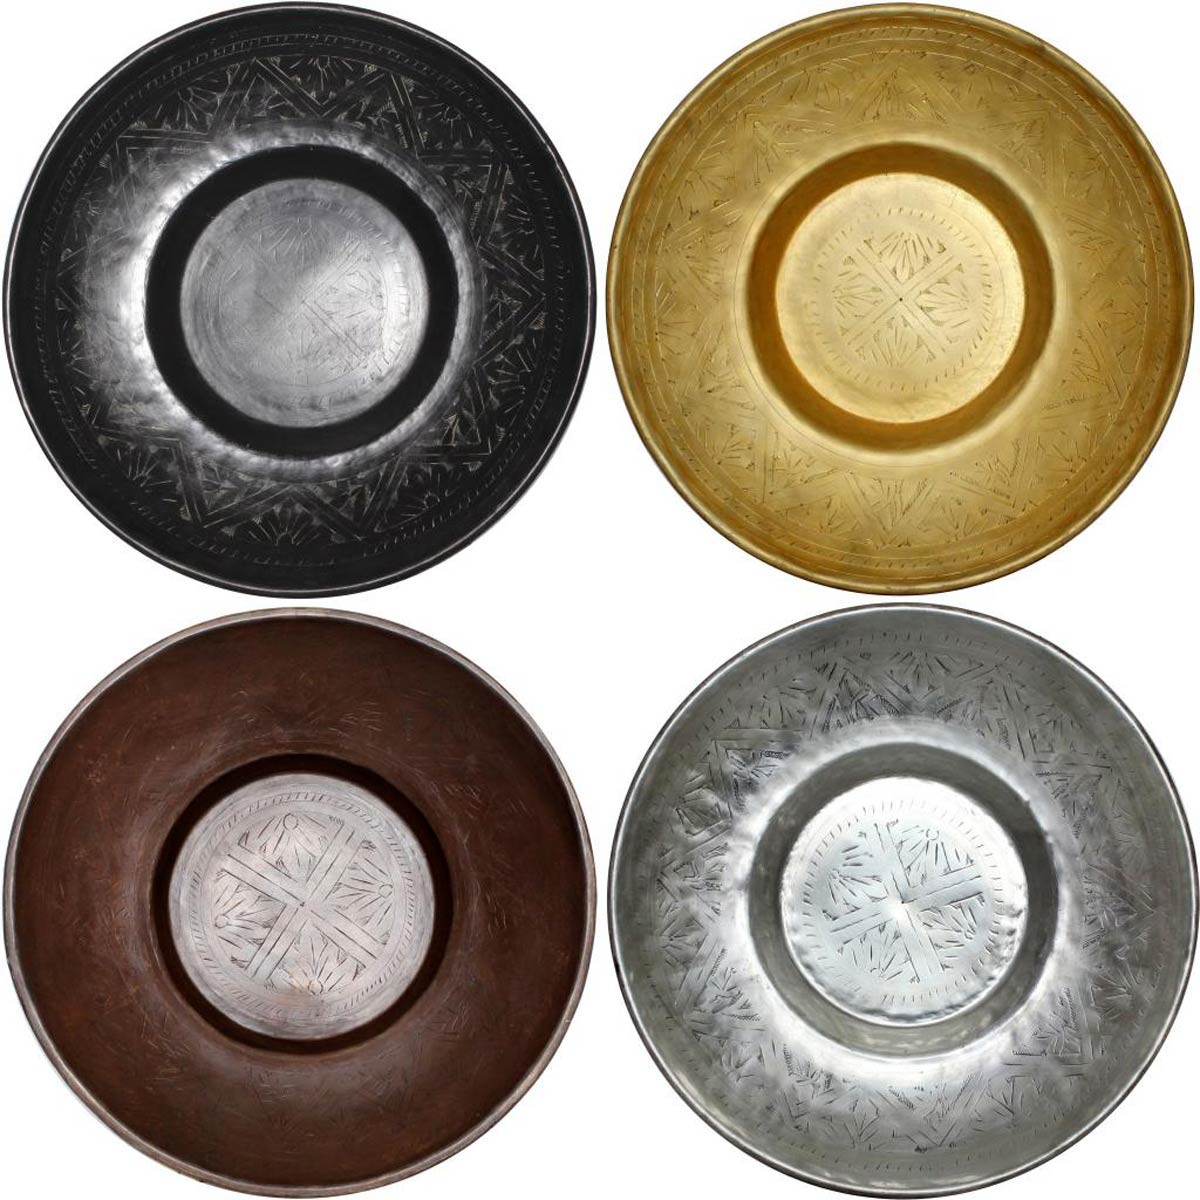 Ren-Wil Kente Set of 4 Plates - Copper/Gold/Black/ Silver